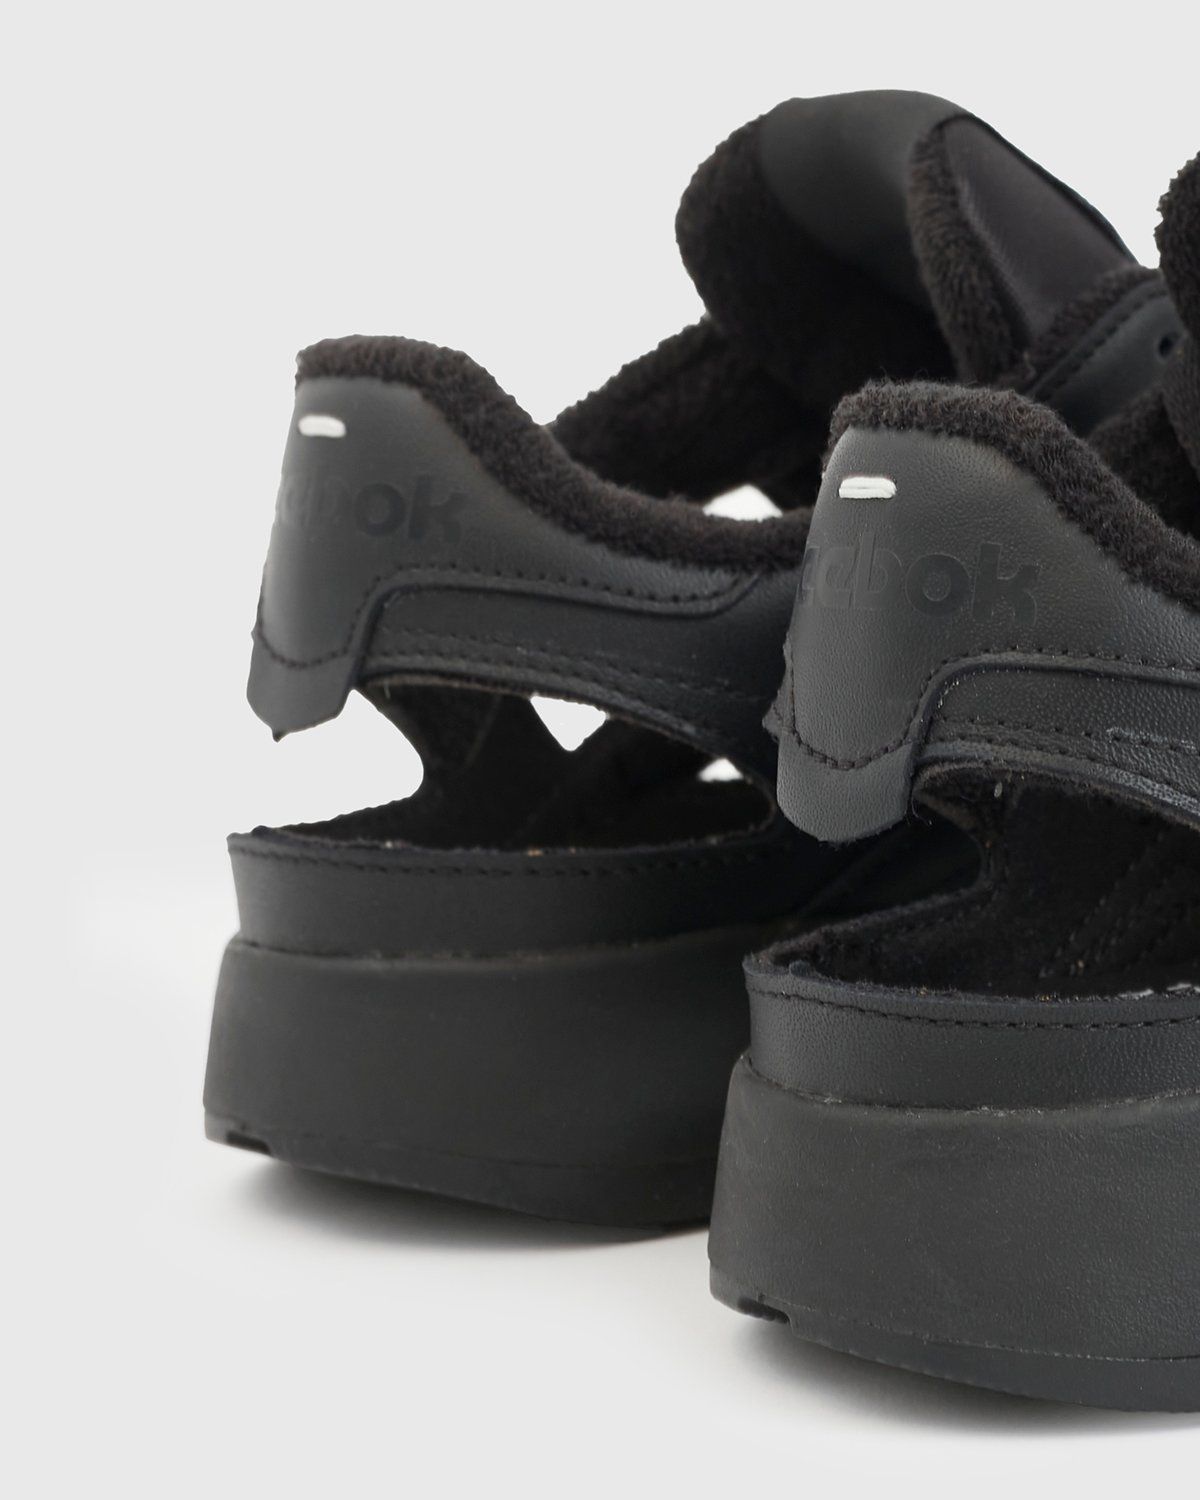 Maison Margiela x Reebok – Classic Leather Tabi Low Black - Sneakers - Black - Image 5